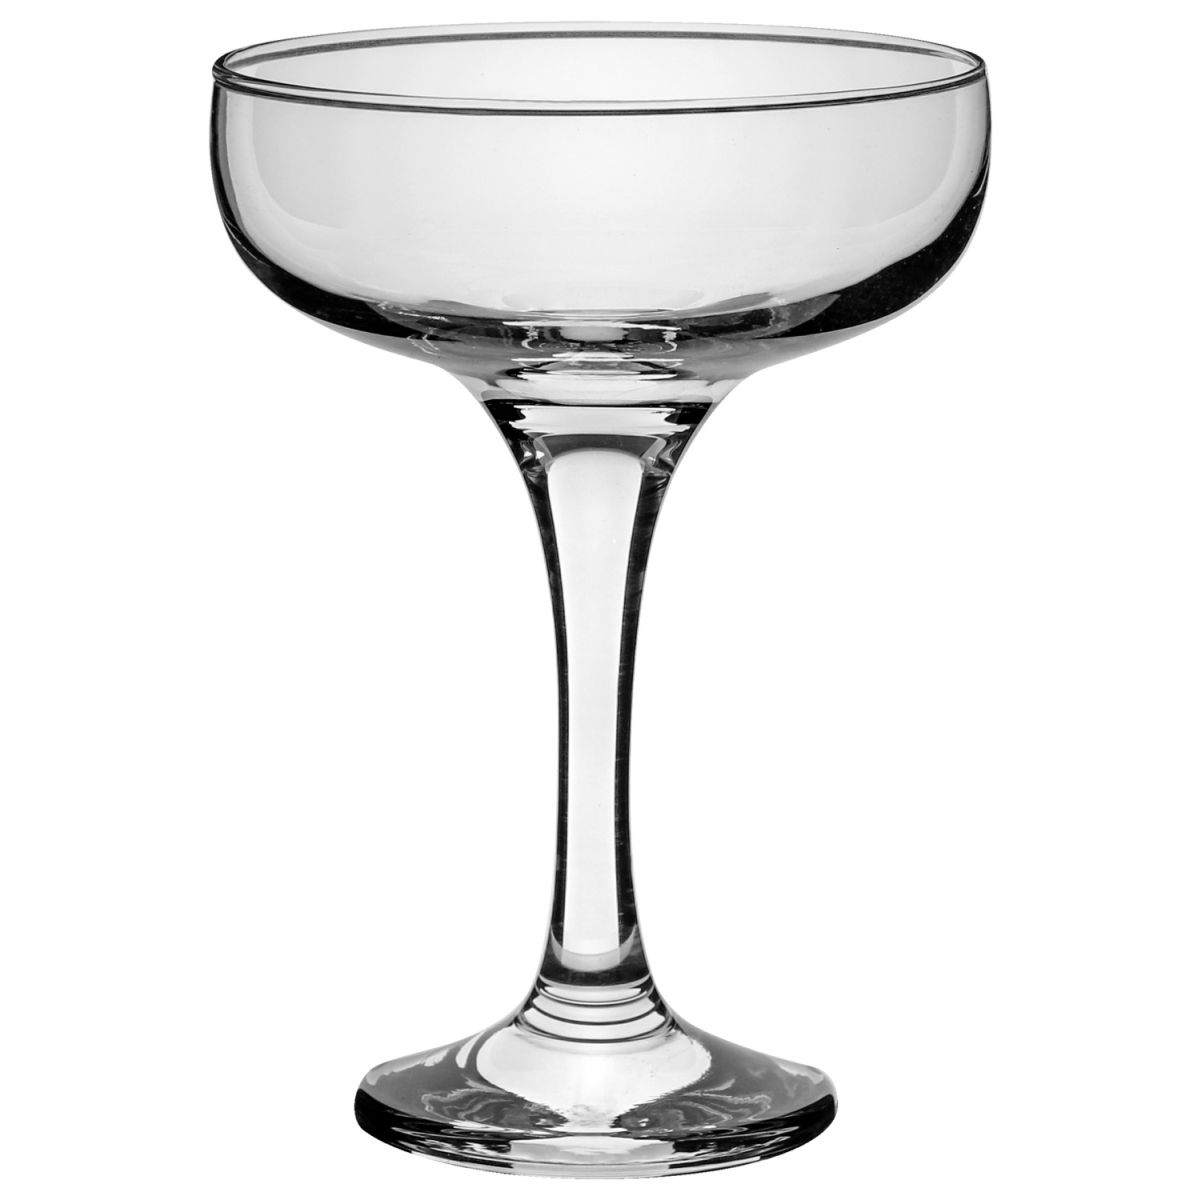 LAV Champagneglas Misket; 235ml, 9.6x13.5 cm (ØxH); transparant; 6 stuk / verpakking